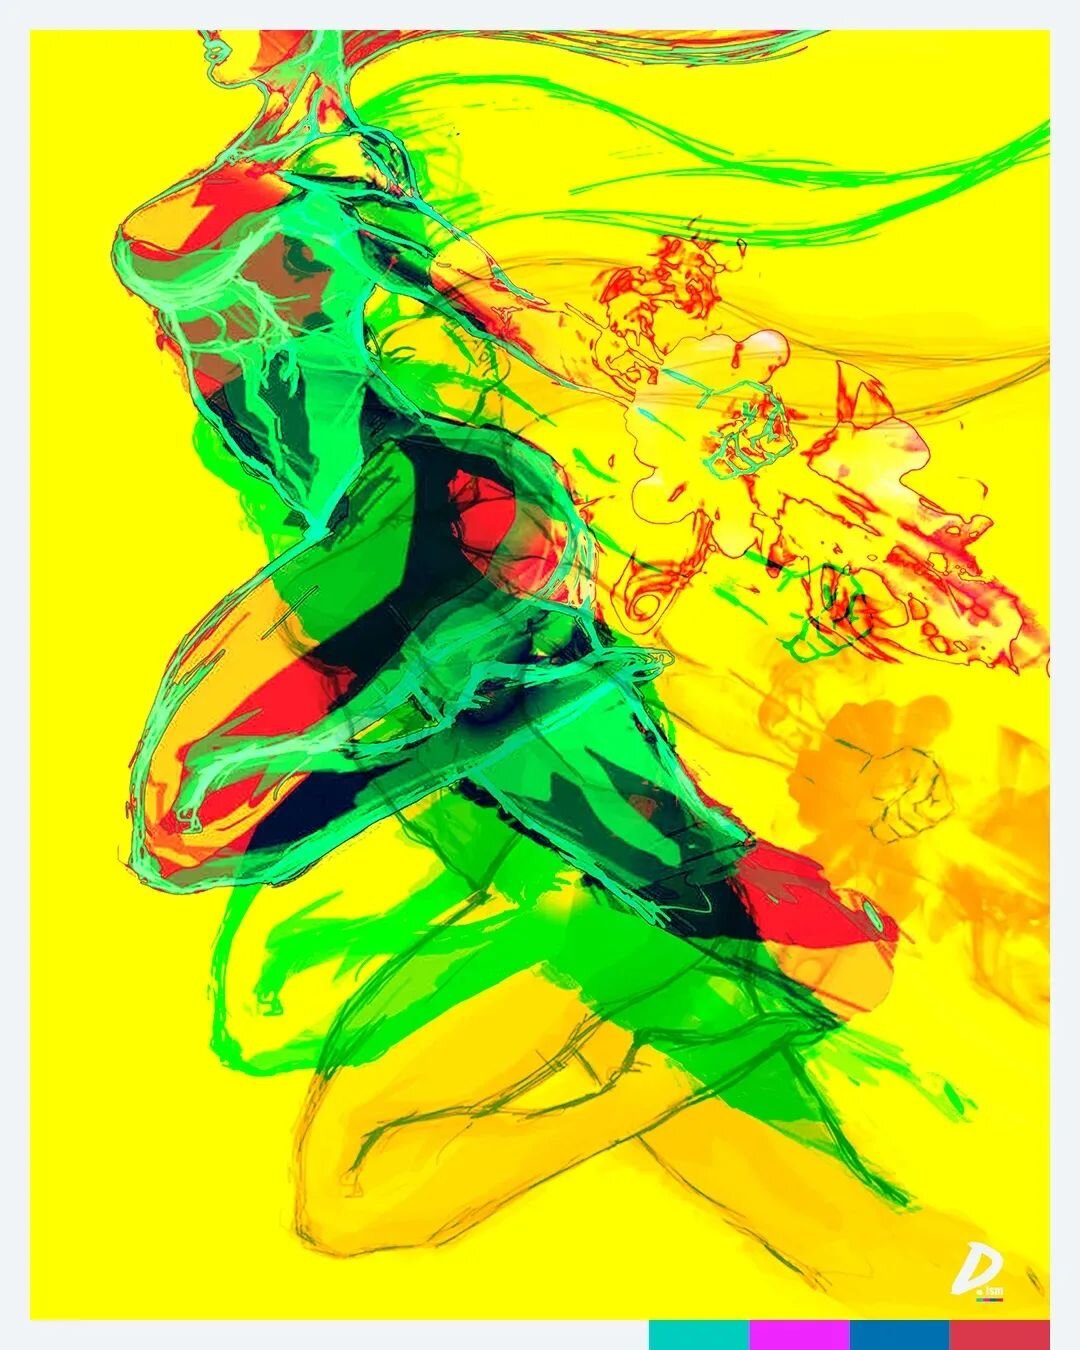 Psy Lock 4
4kx5k px
Digital art

#art #artworld #artistsoninstagram #artcollective #artcurator #artcurator #creativecollective #creativeuprising #colorart #nfts #nftartist #nftart